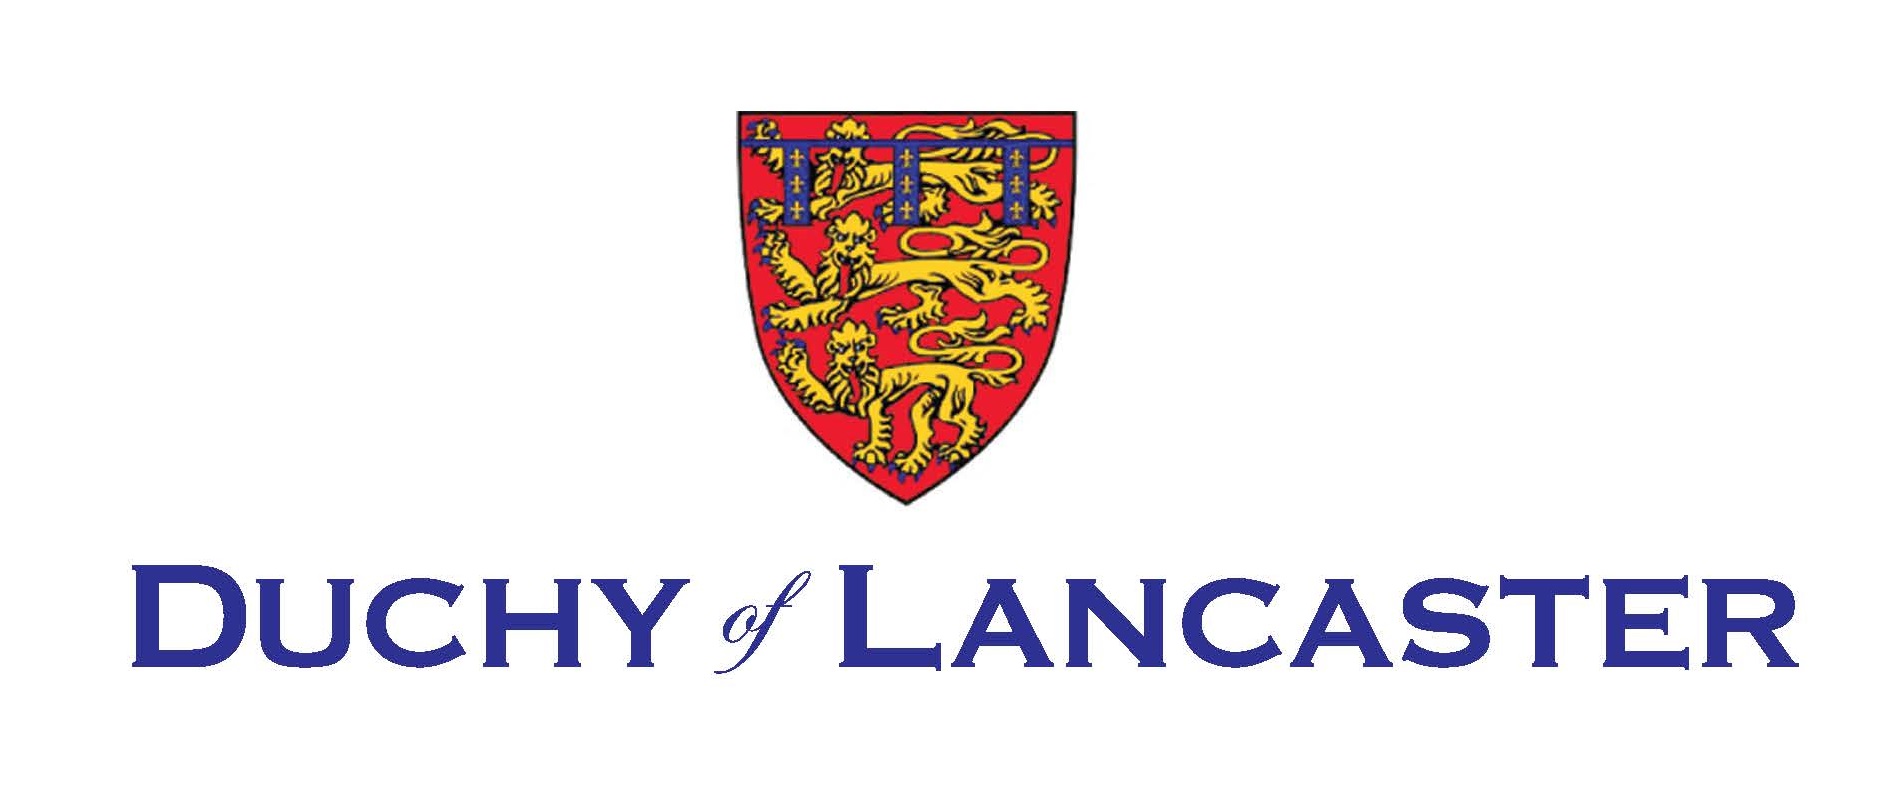 Duchy of Lancaster logo.jpg